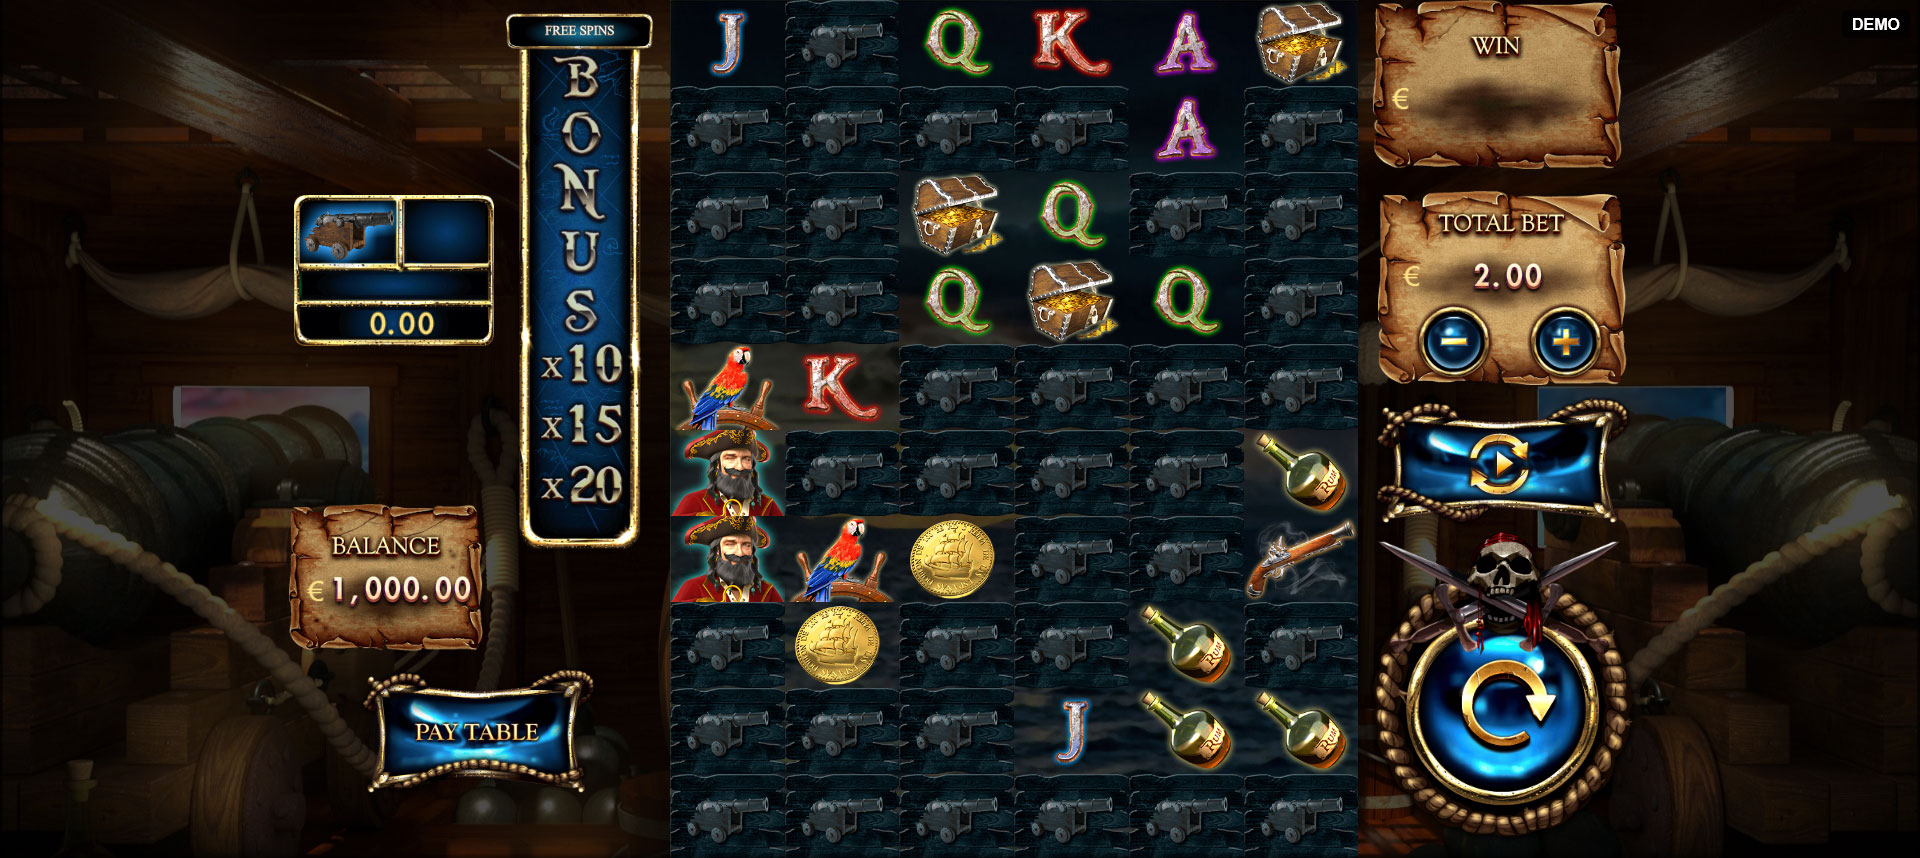 schermata del gioco slot online parrot bay